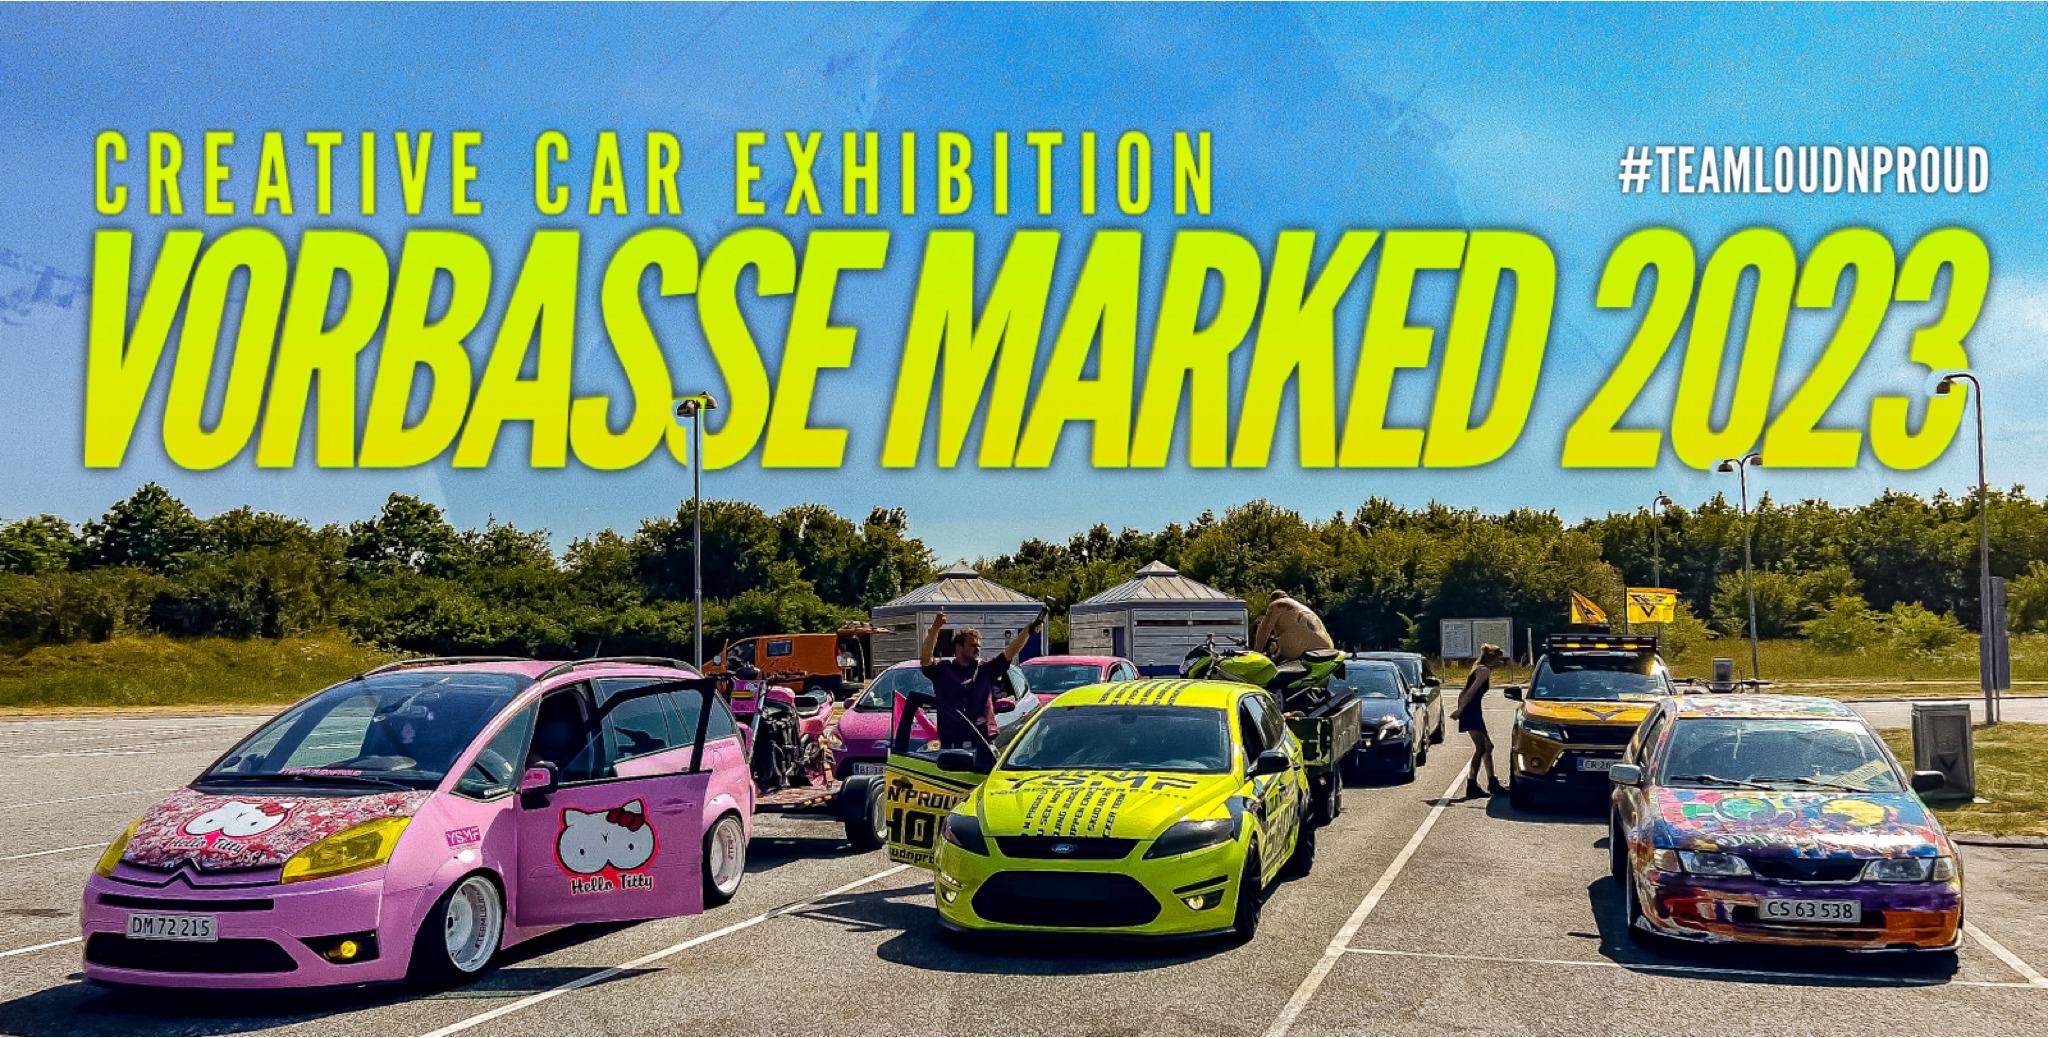 Vorbasse Marked 2023, Creative Car Exhibition, #TeamLoudnProud - Racelens